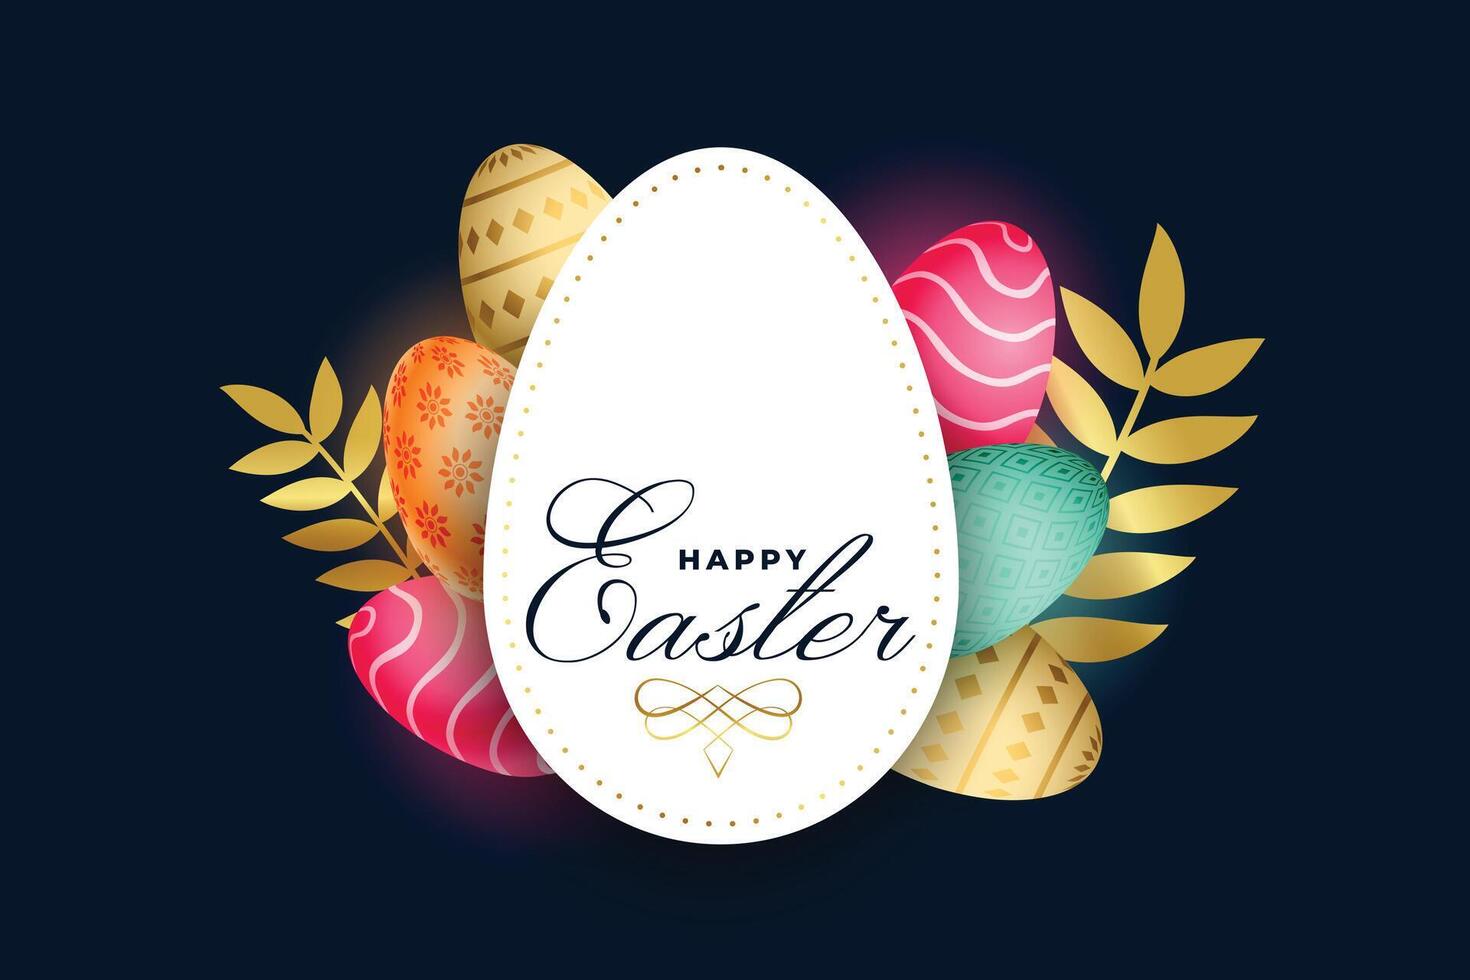 contento Pascua de Resurrección celebracion tarjeta con vistoso huevos vector